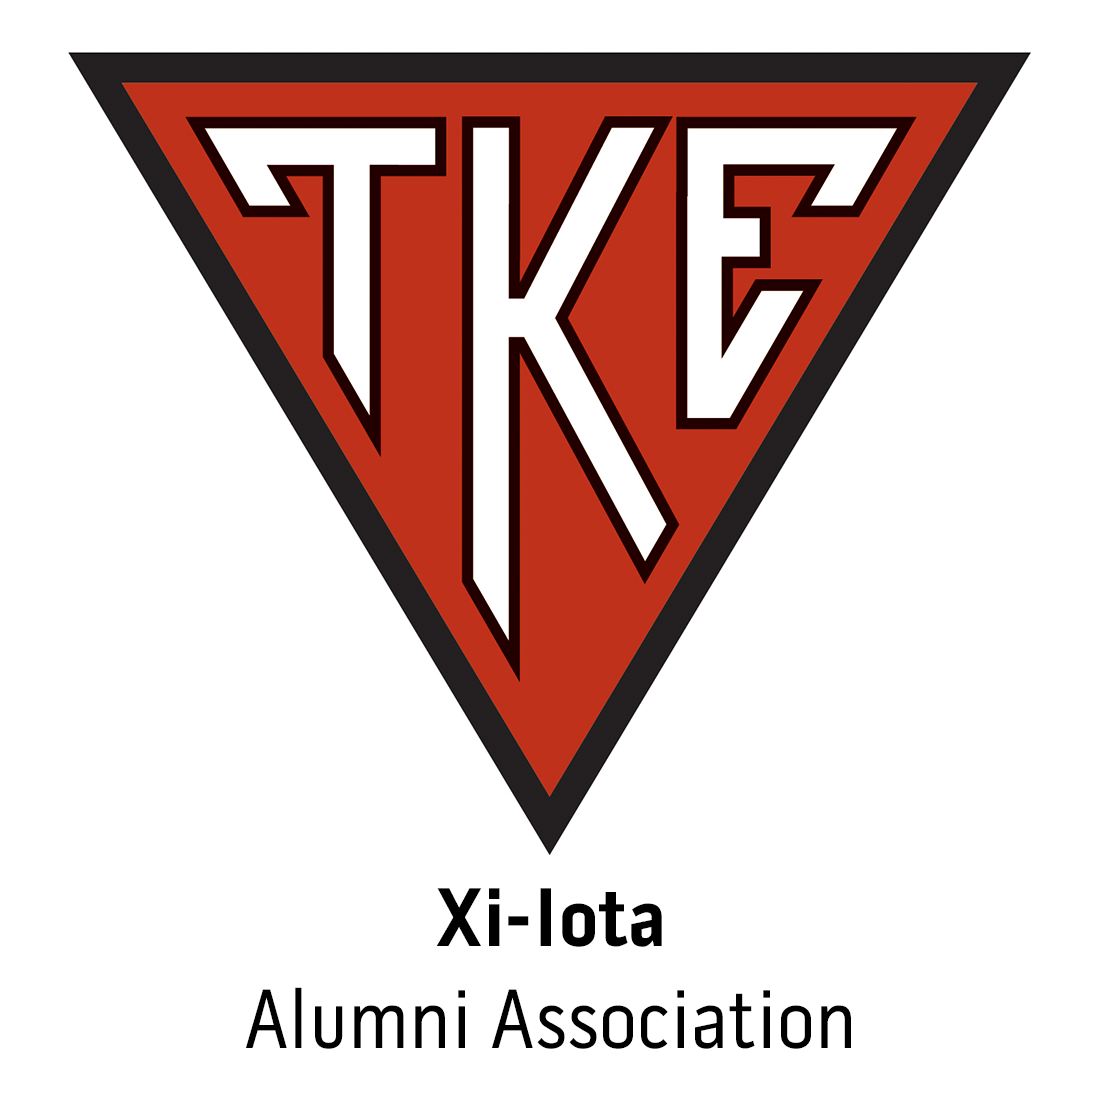 Xi-Iota Alumni Association at University of Central Florida